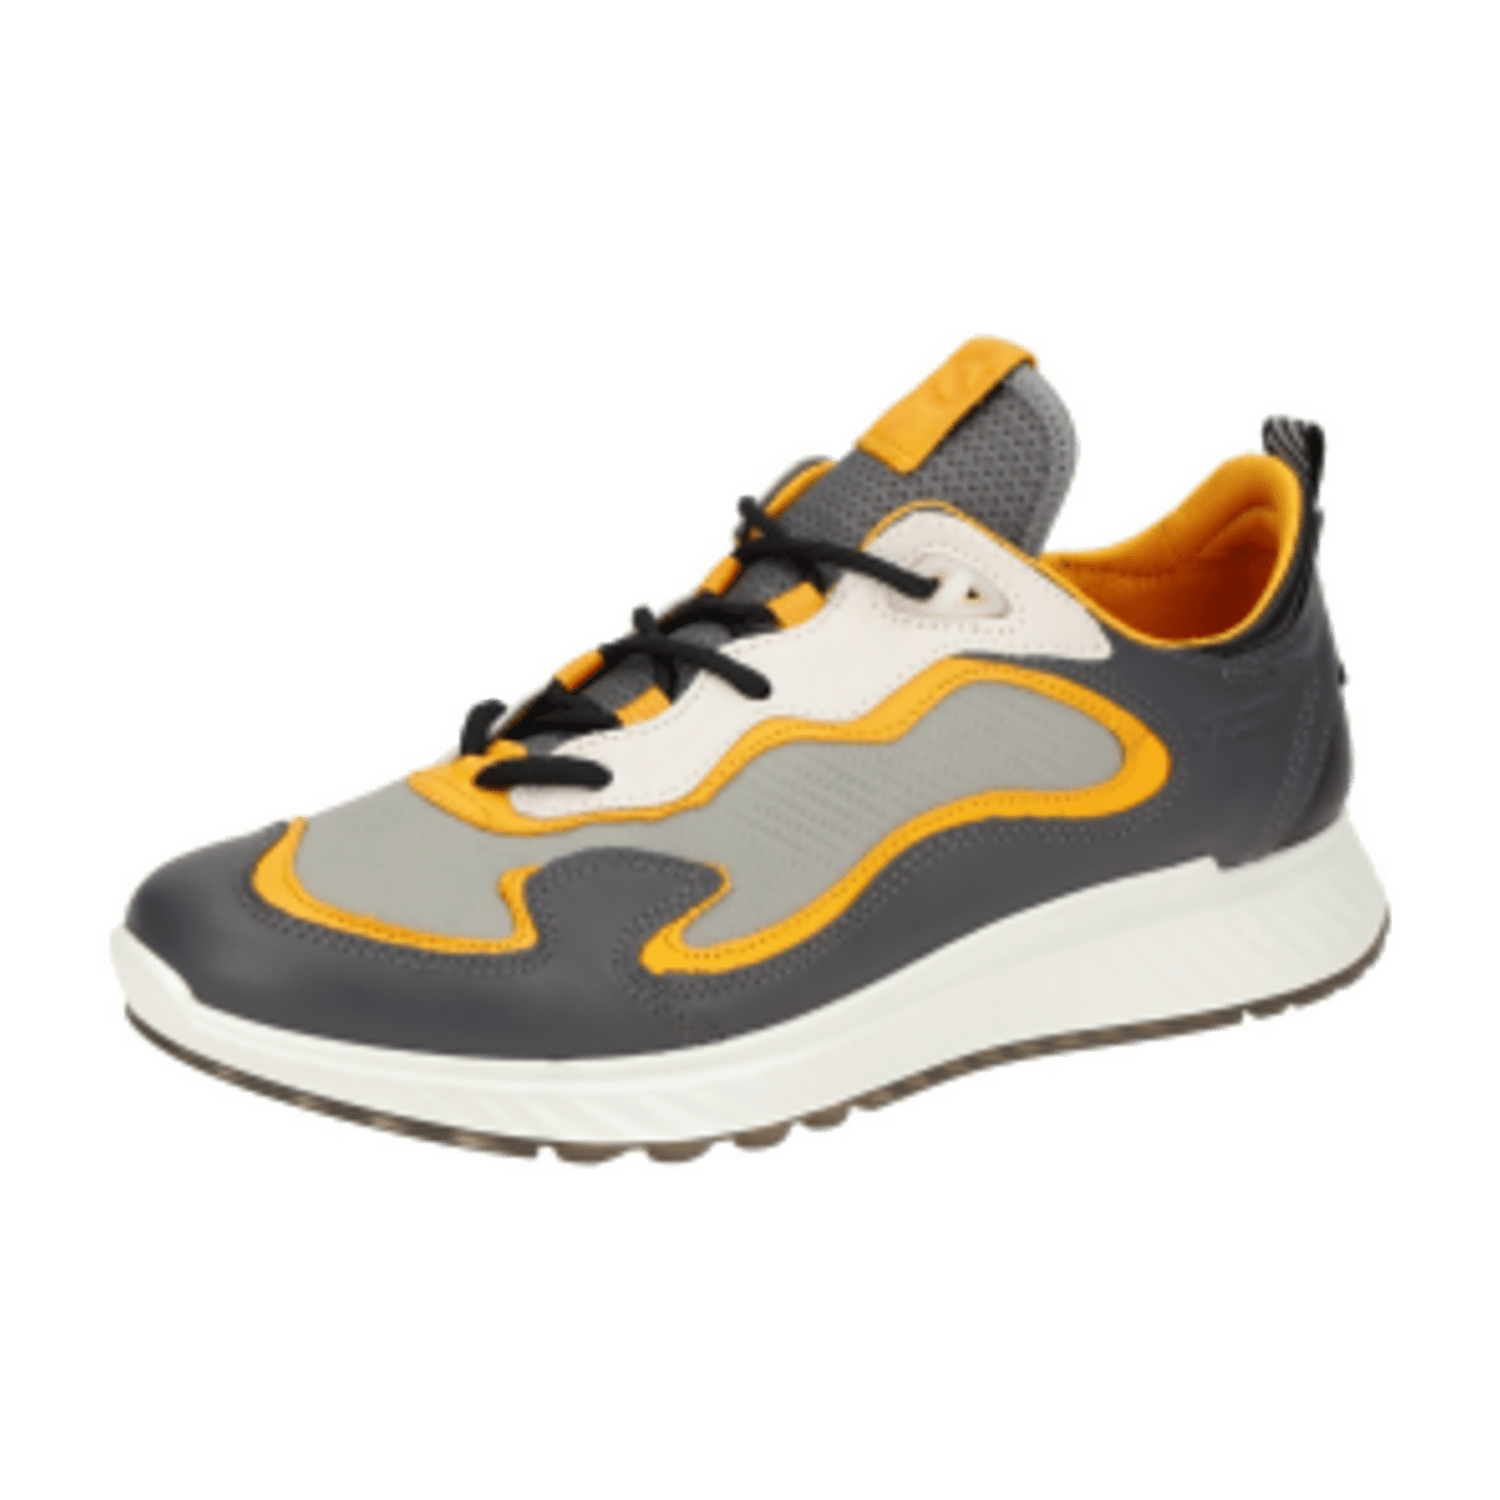 Ecco ST.1 Schuhe Sneaker grau gelb 837854